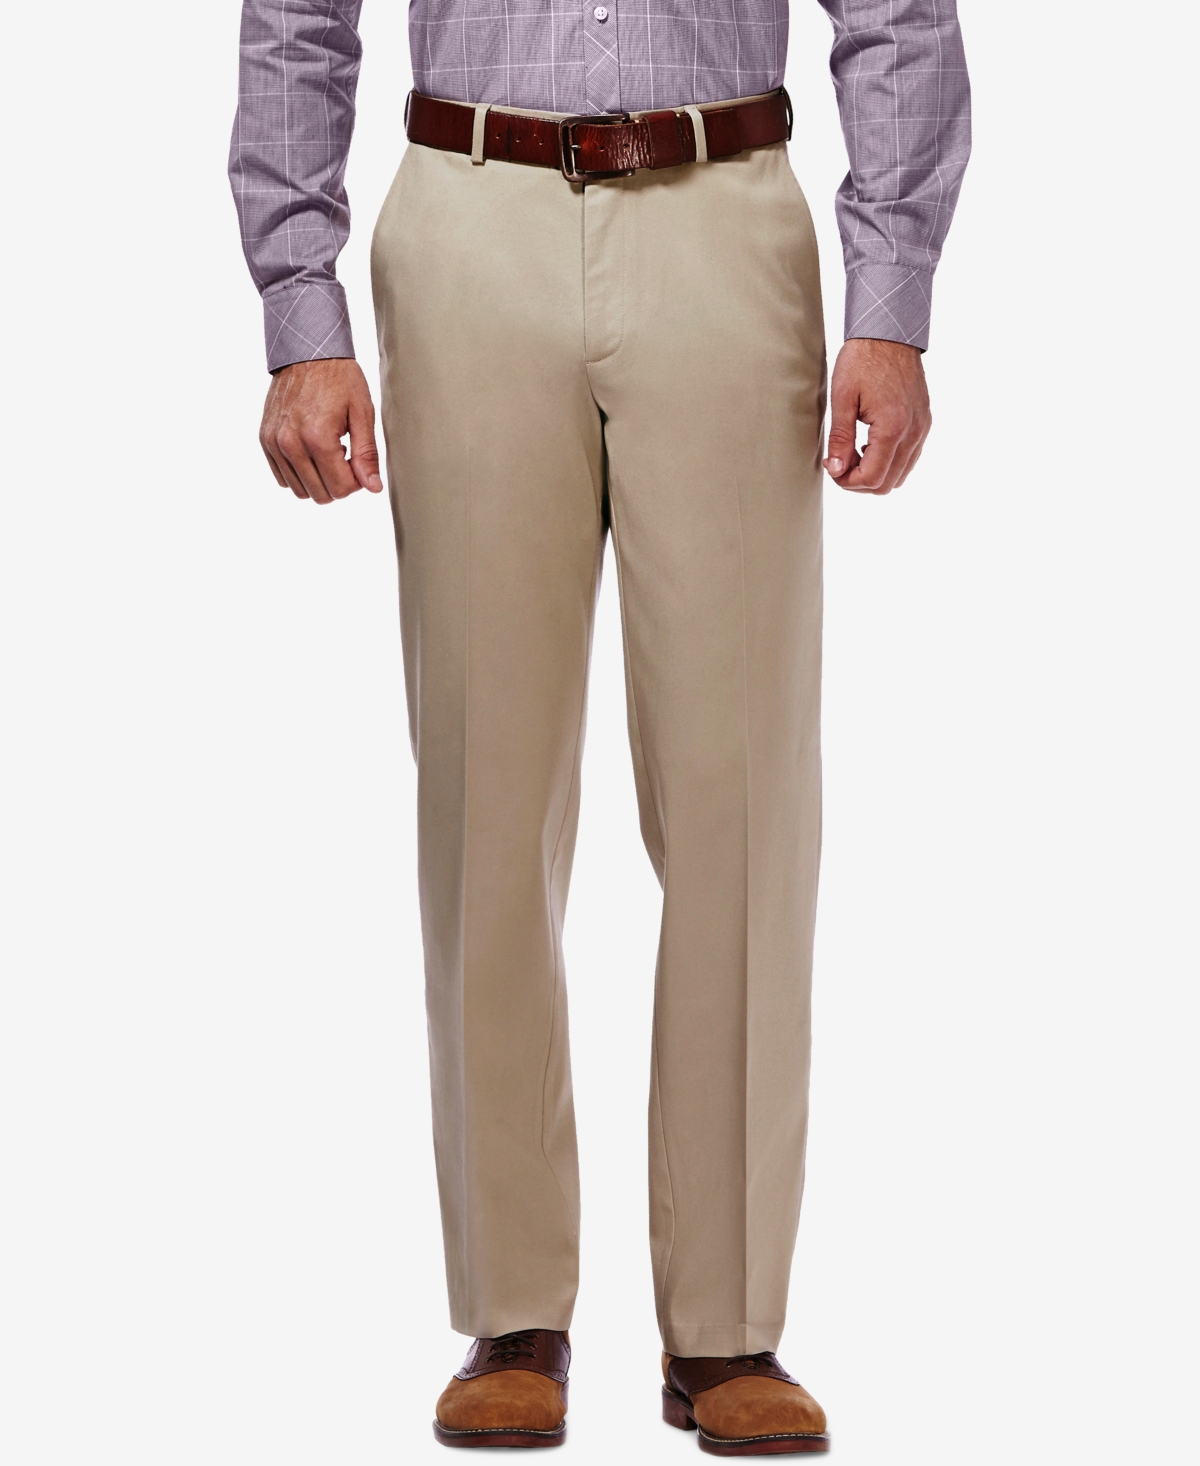 Men's Premium No Iron Khaki Classic Fit Flat Front Hidden Expandable Waist Pant - Khaki